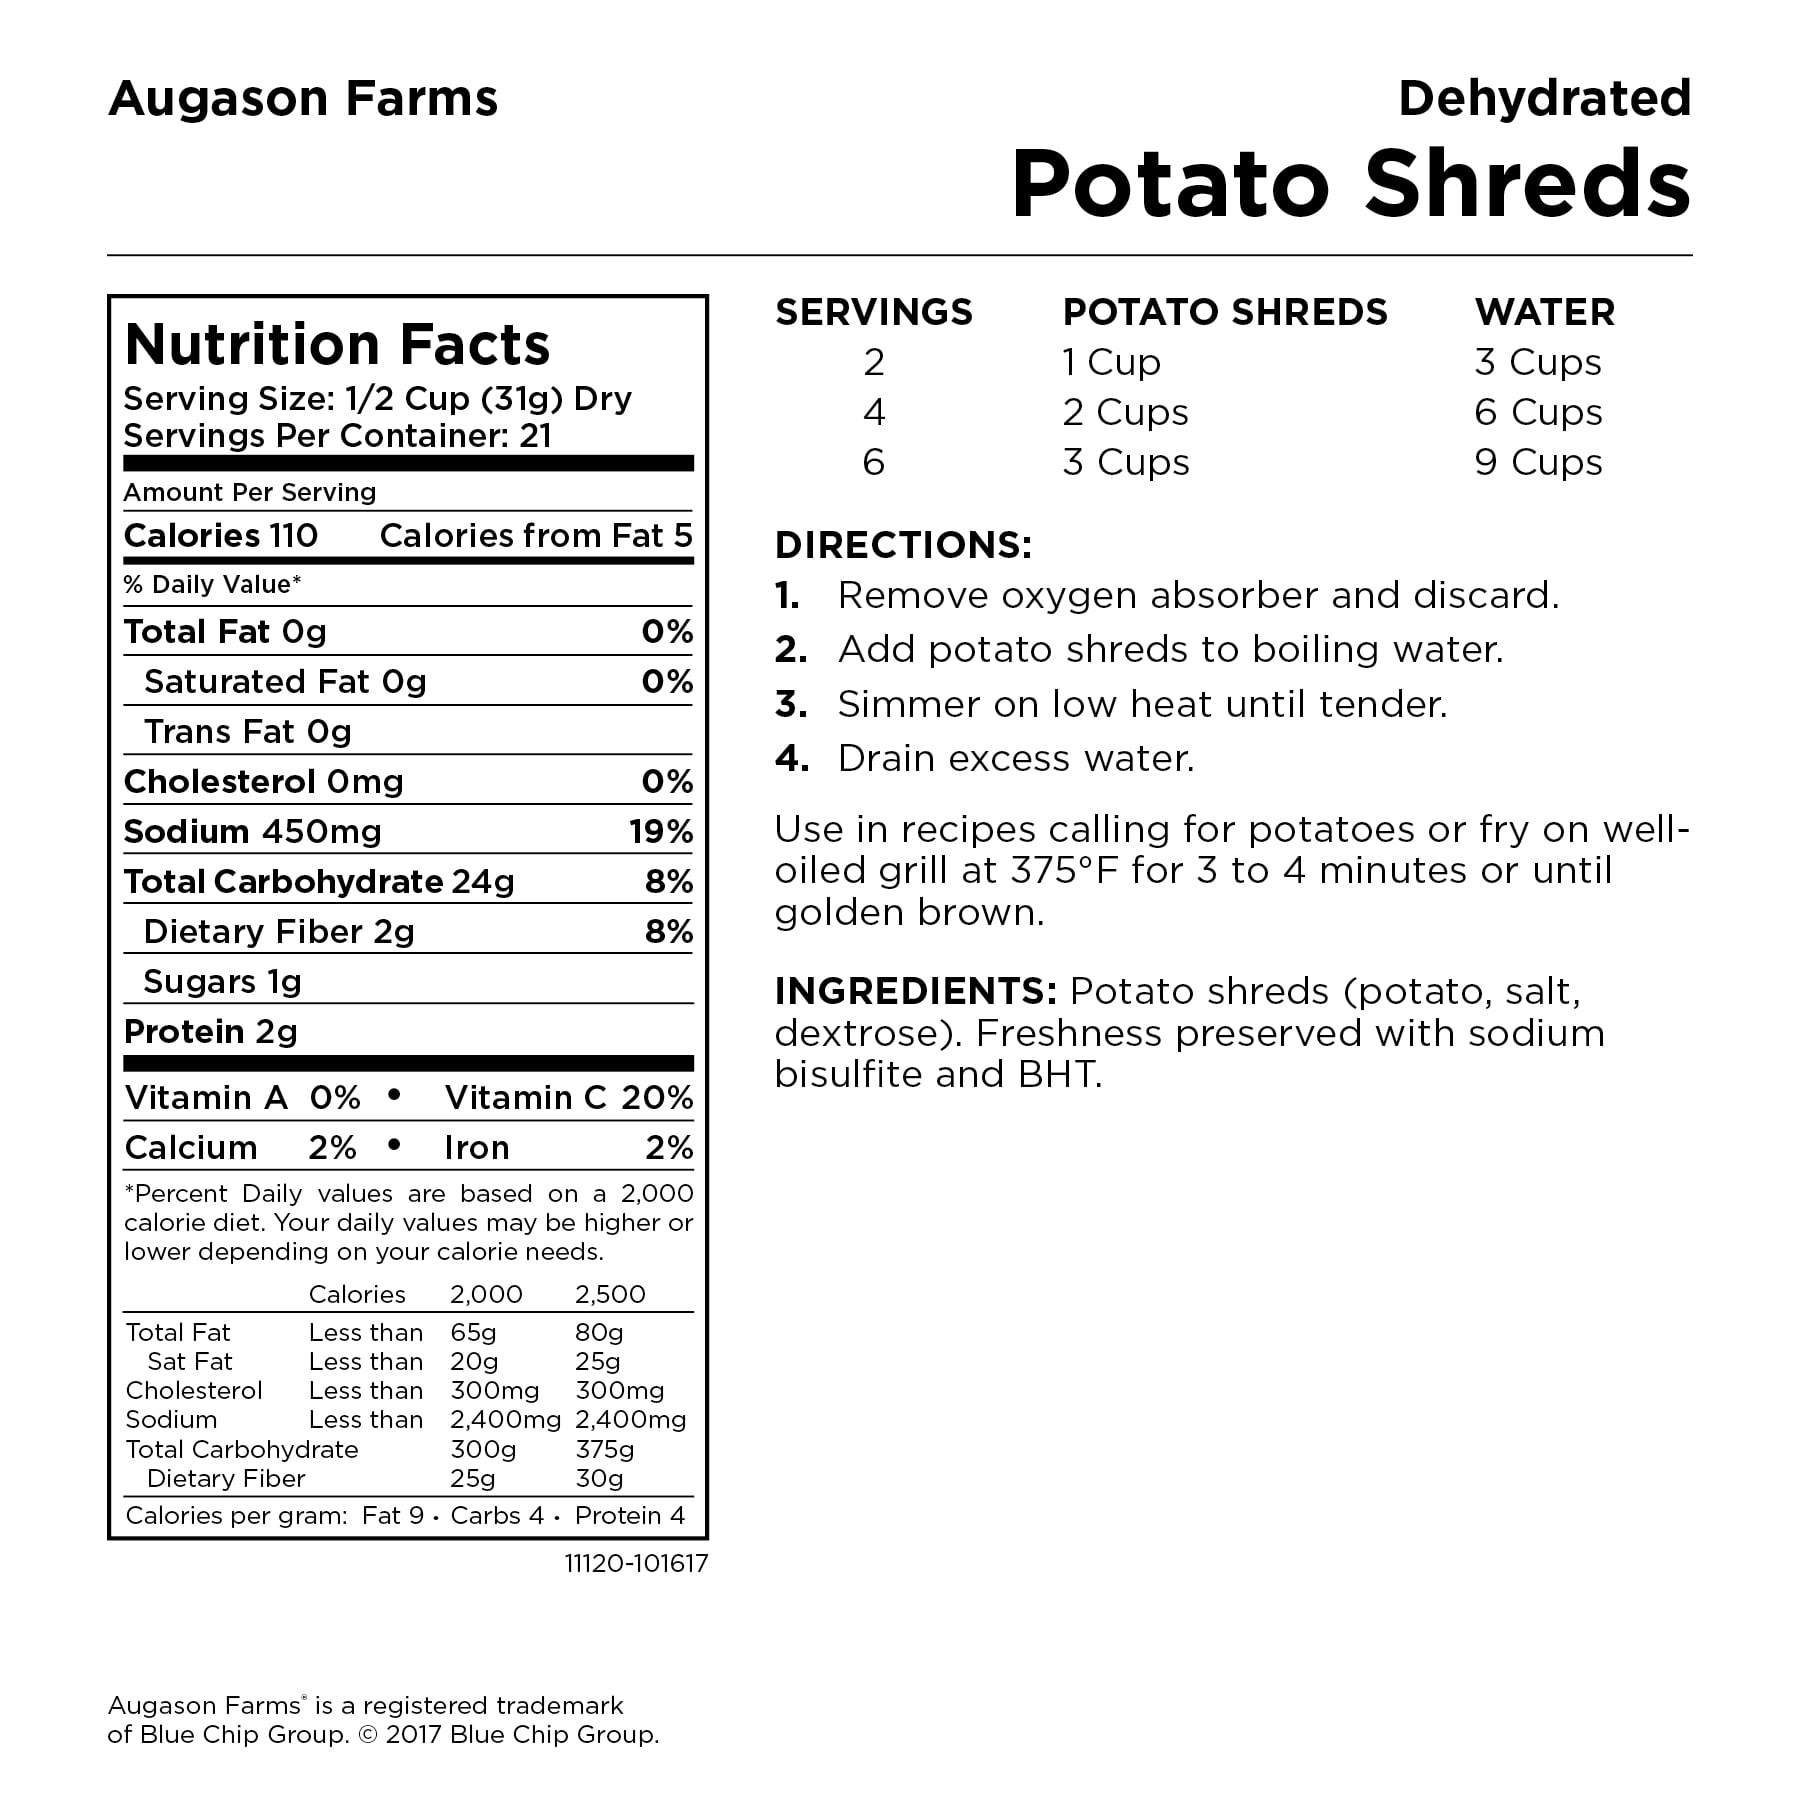 Augason Farms Dehydrated Potato Shreds